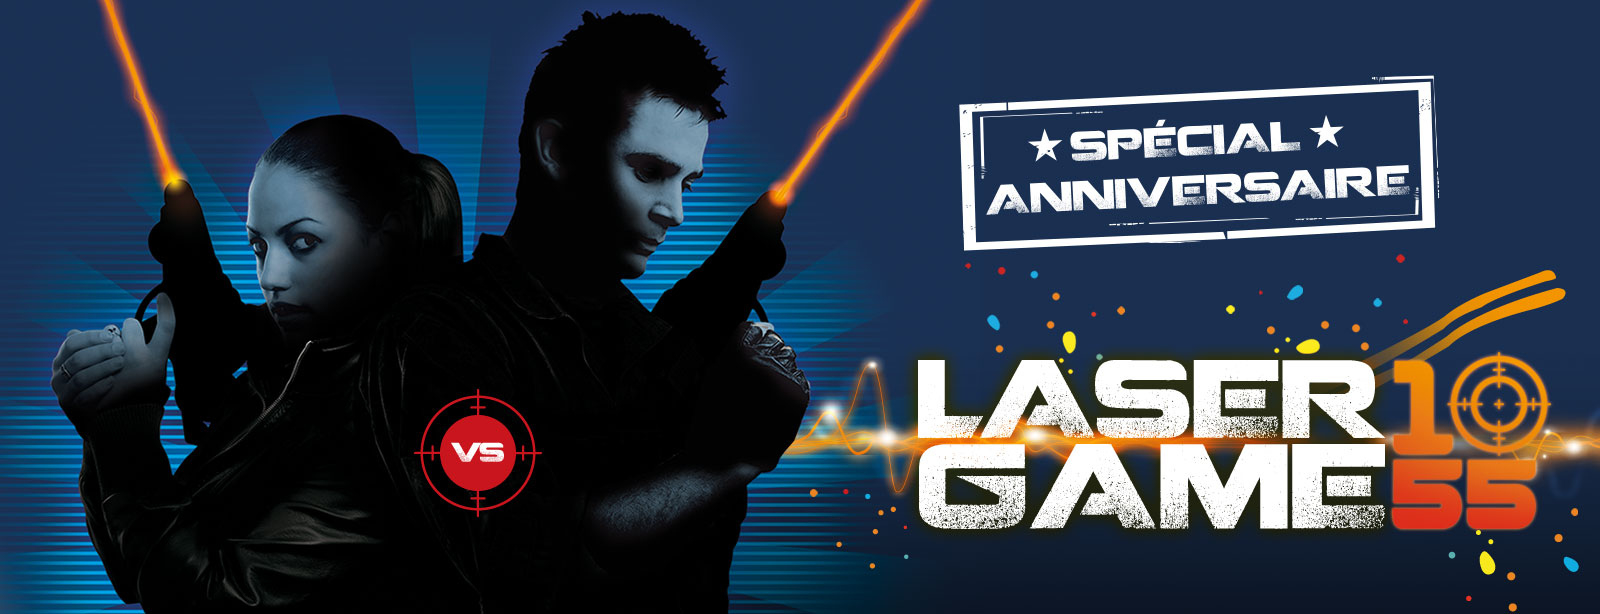 Carte invitation anniversaire laser game gratuite à imprimer